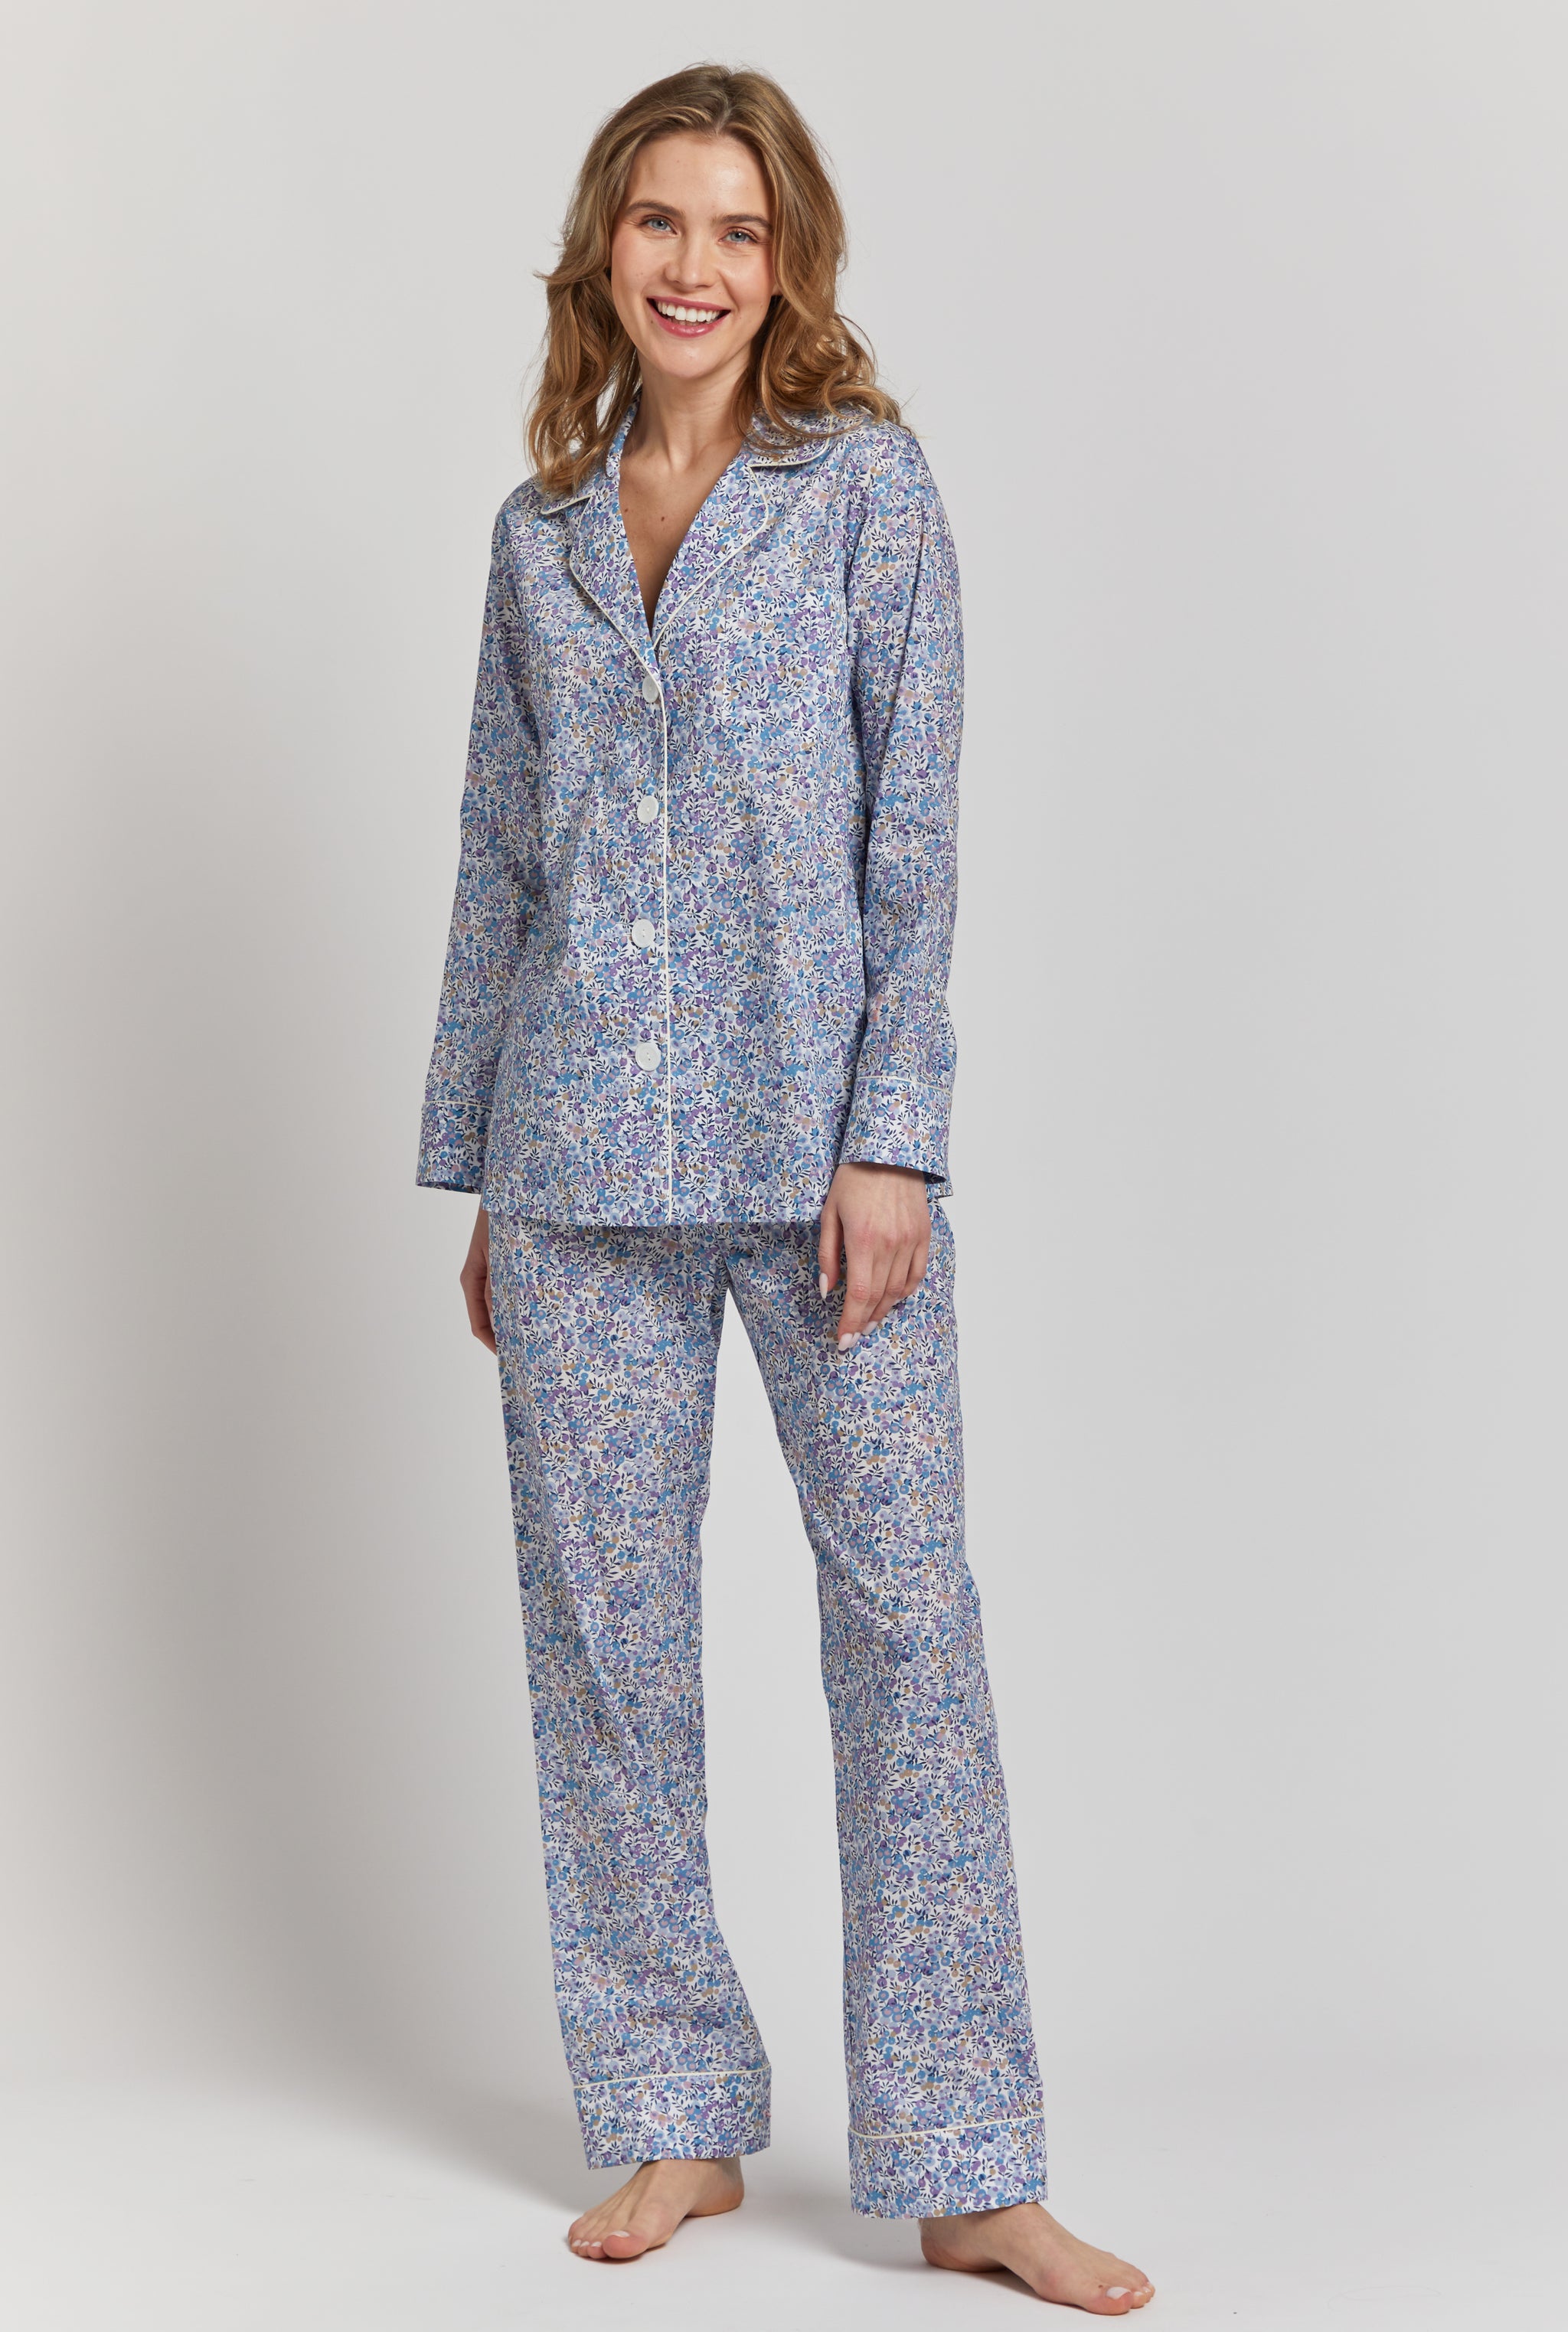 Women's Pajamas Cotton Blend, Sleepwear